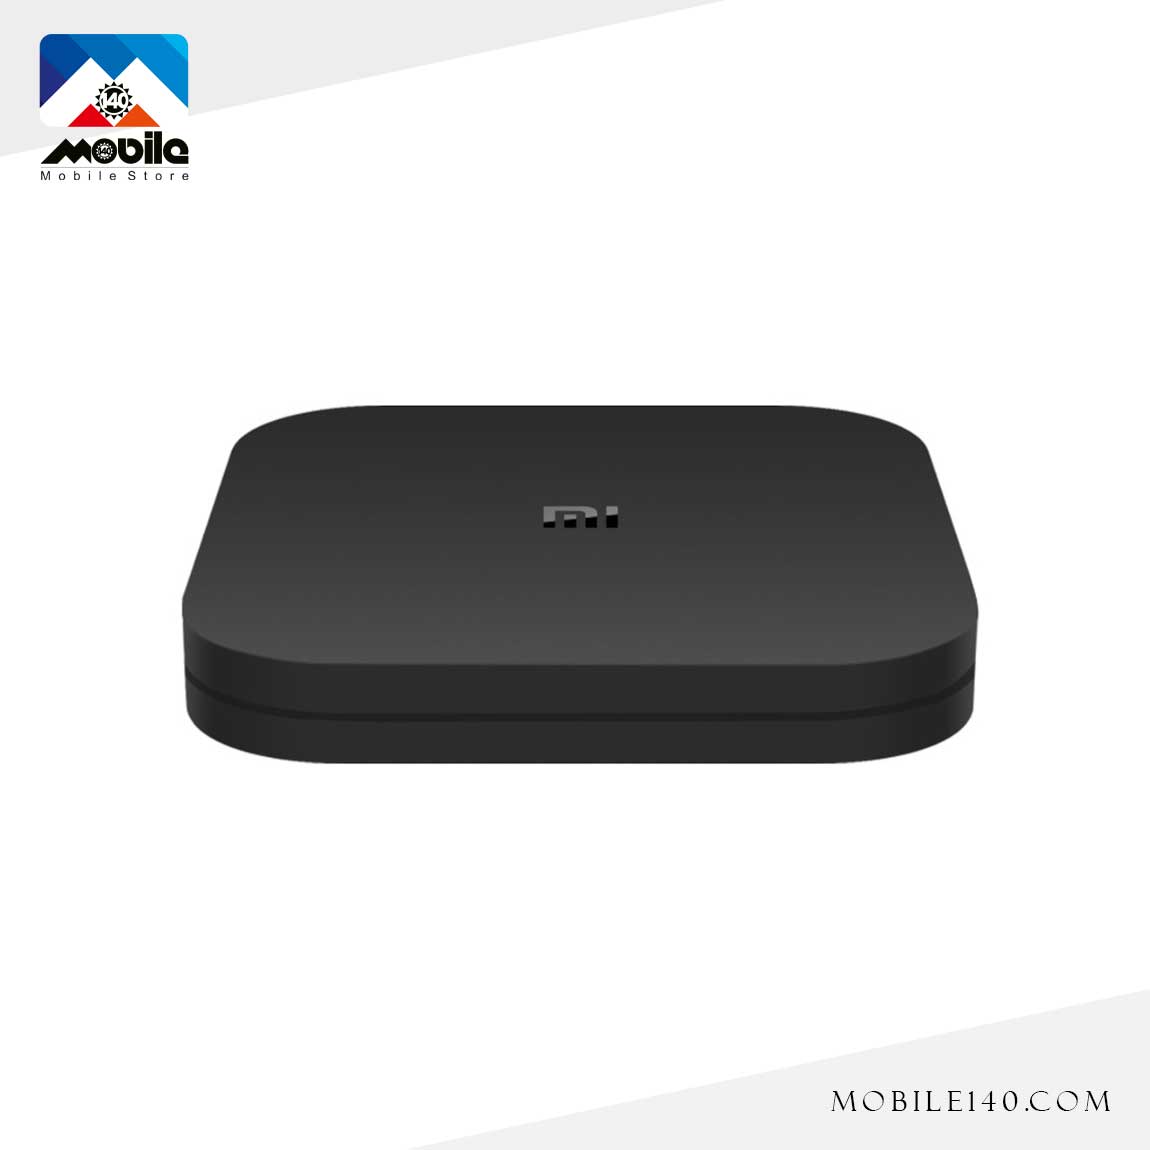 Xiaomi Mi TV Box S With HDMI Cable Android Box 1